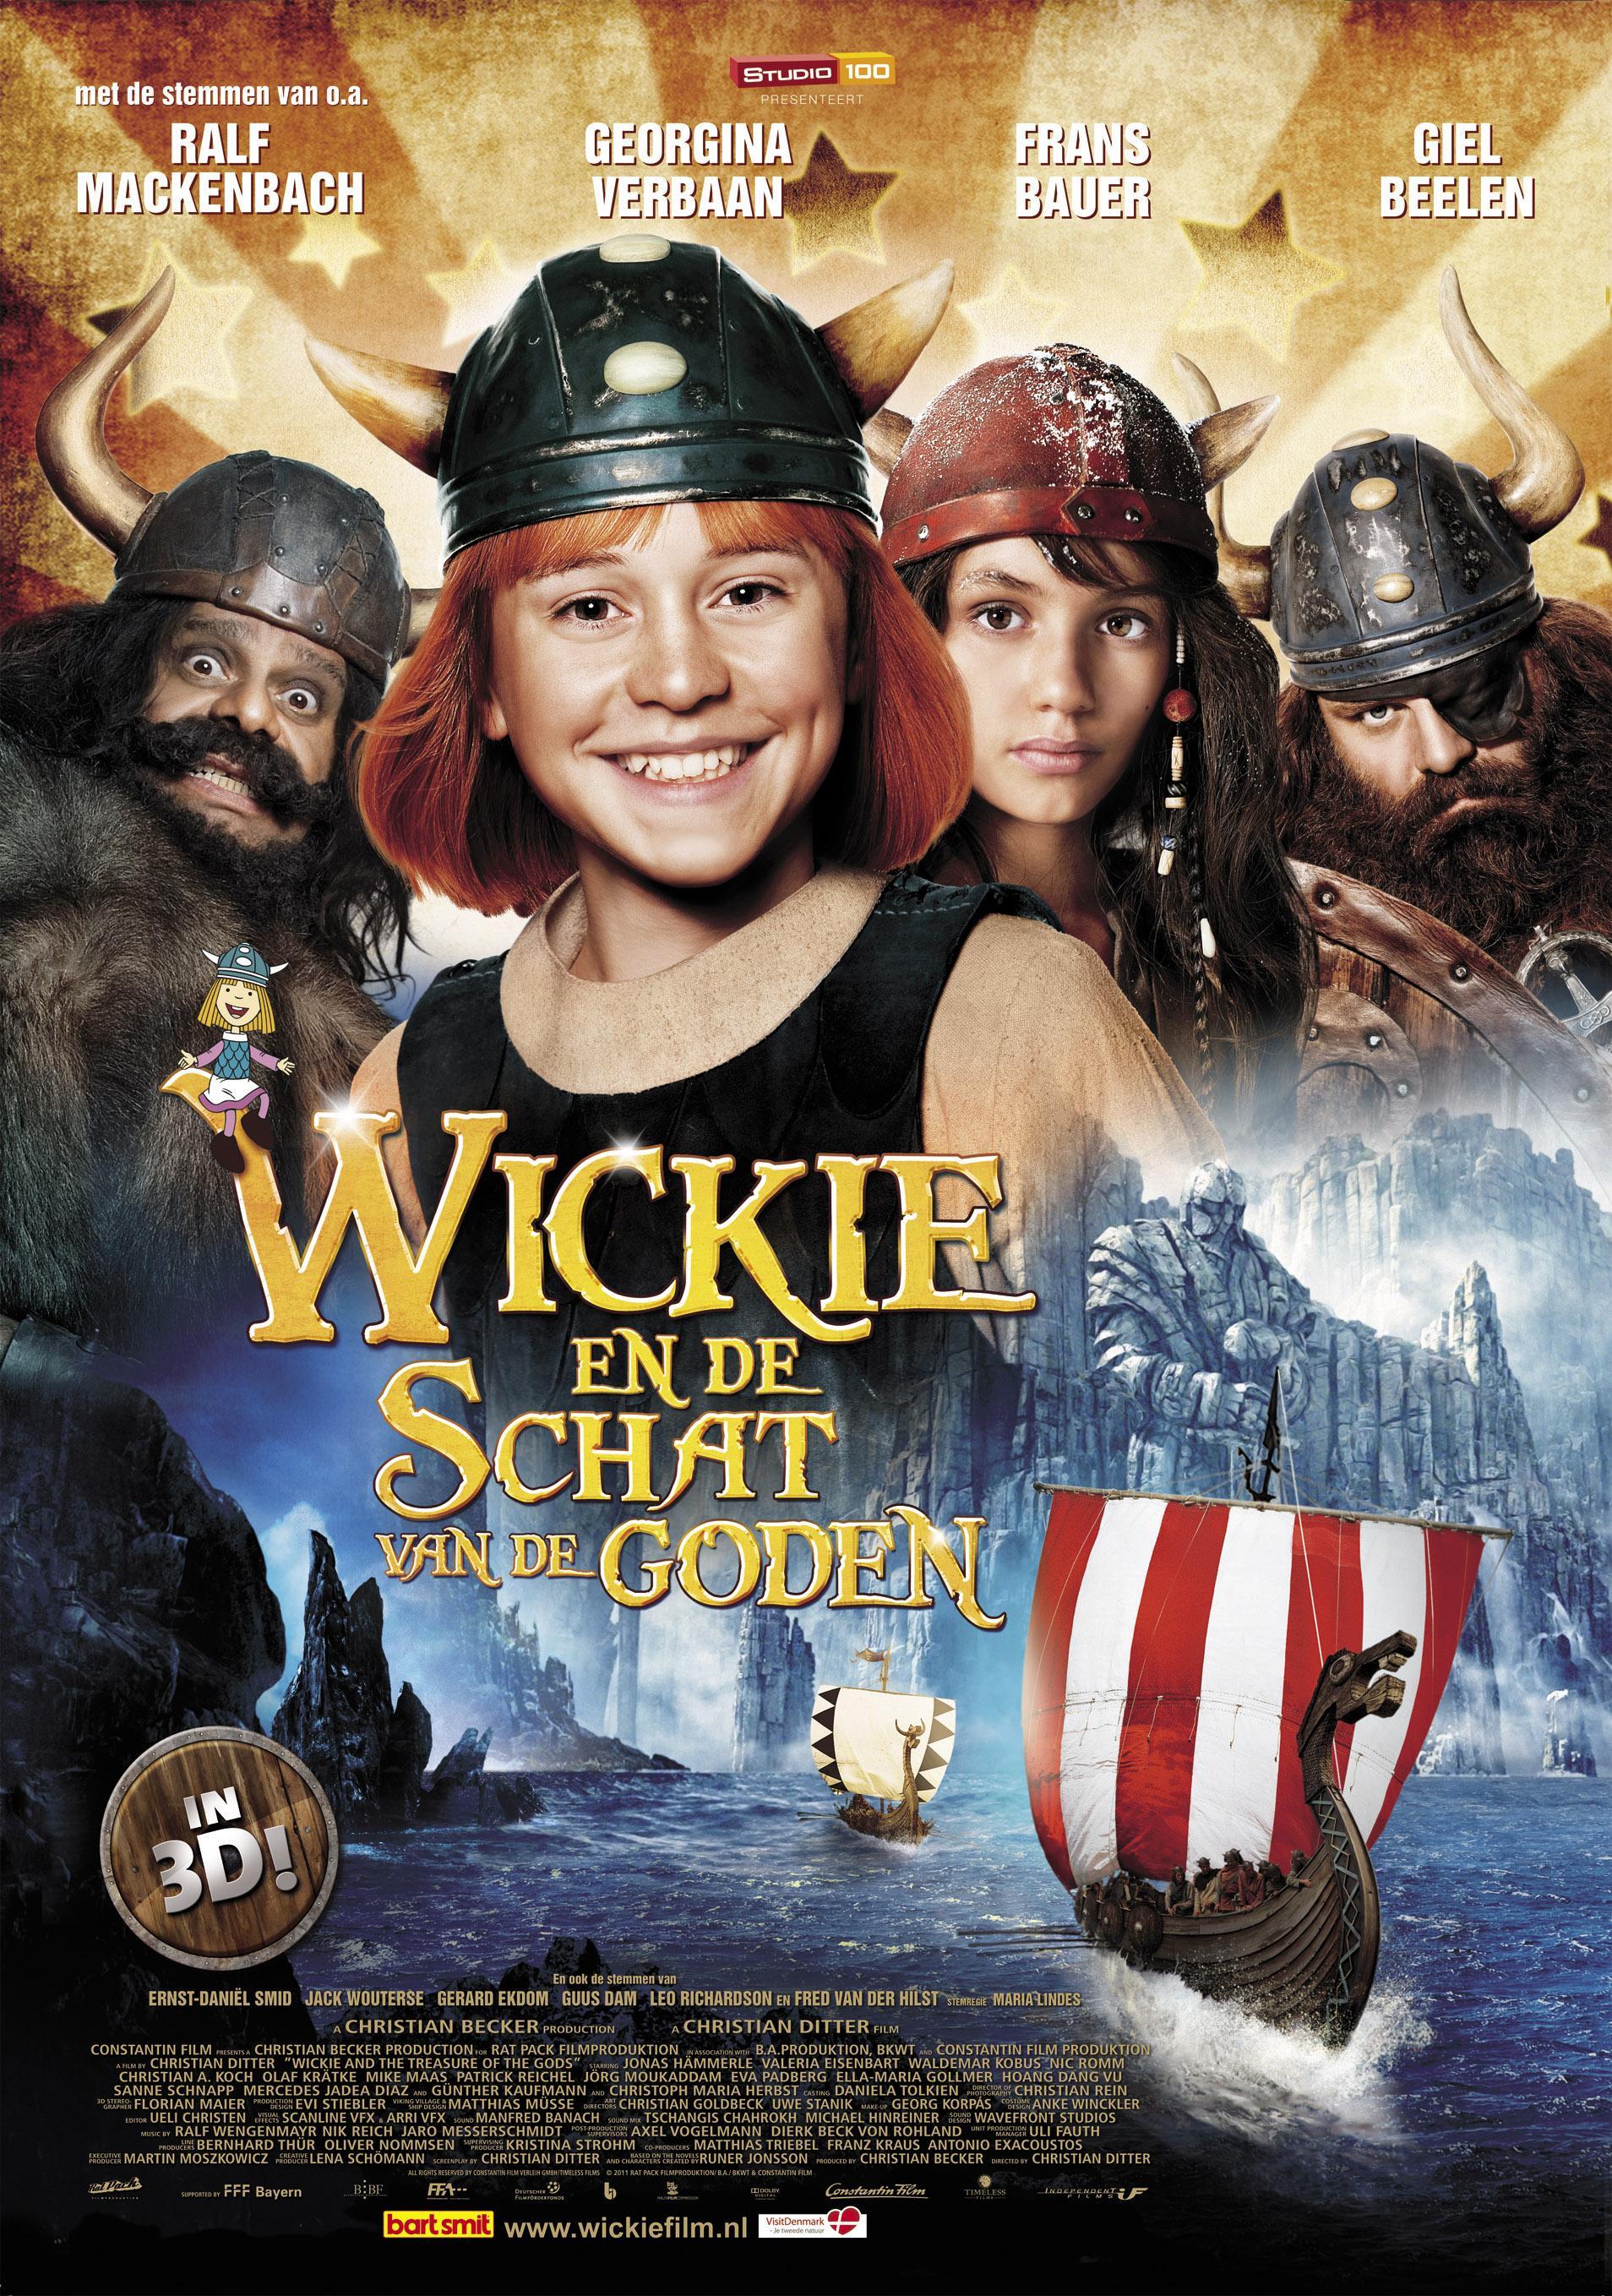 Постер фильма Вики, маленький викинг 2 | Wickie auf grober Fahrt